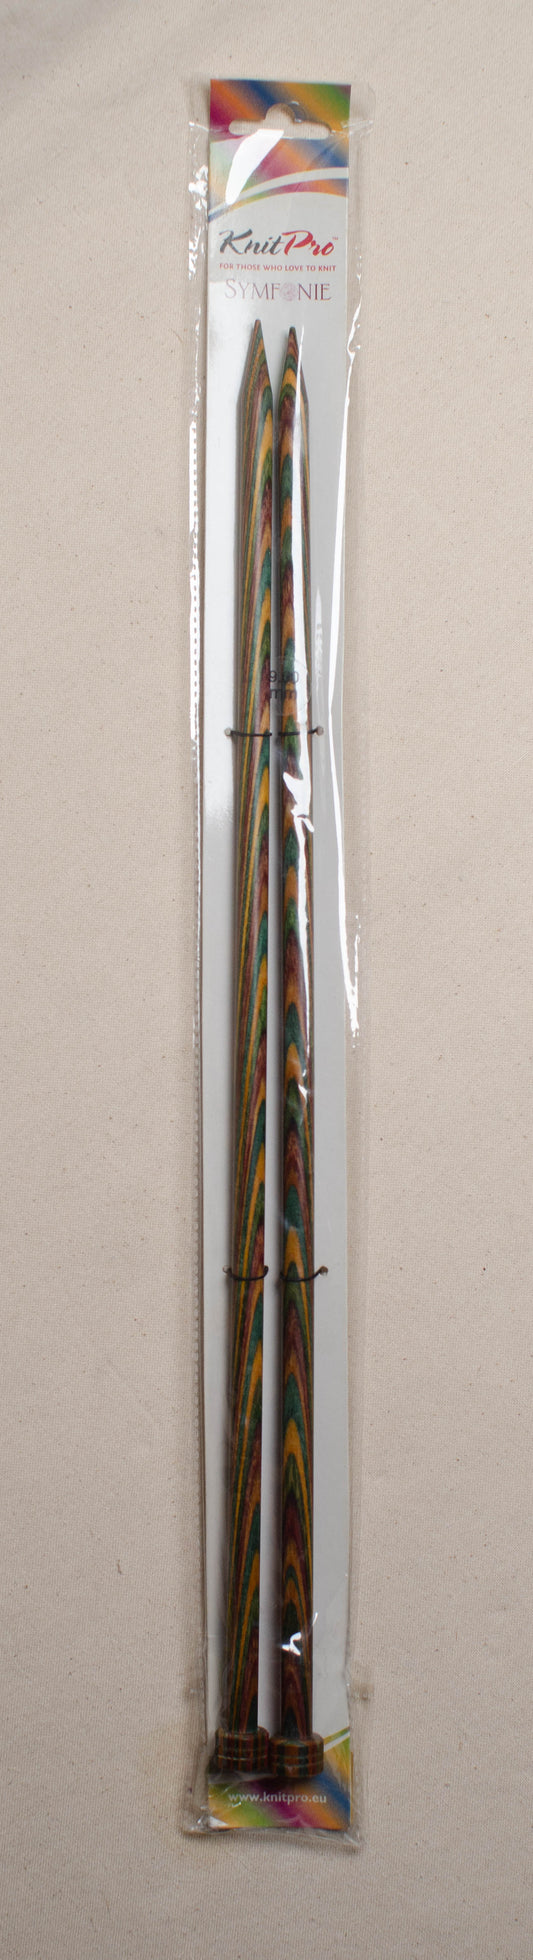 Knit Pro 40 cm x 9 mm Symfonie Single Pointed Needles, Multi-Color